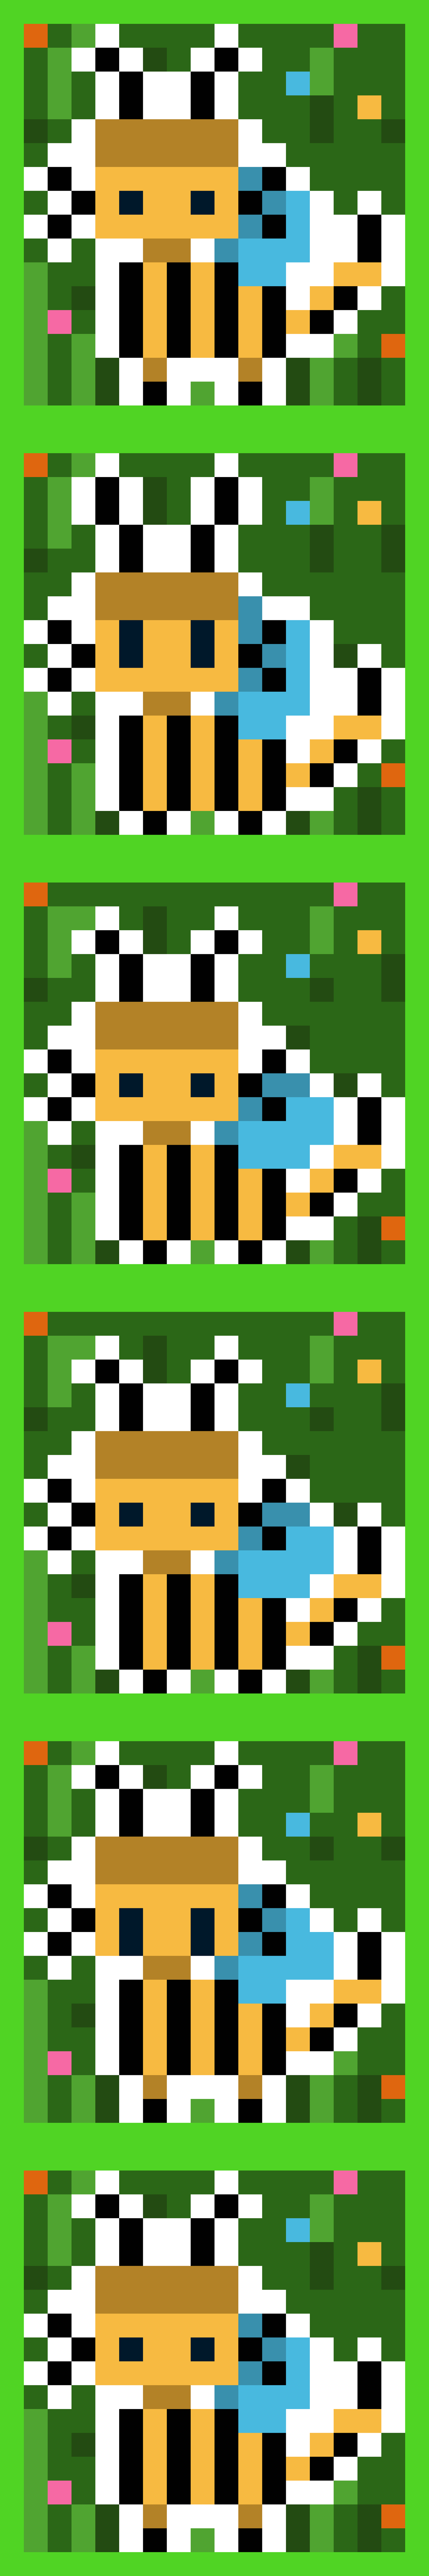 BitCat Bee #37